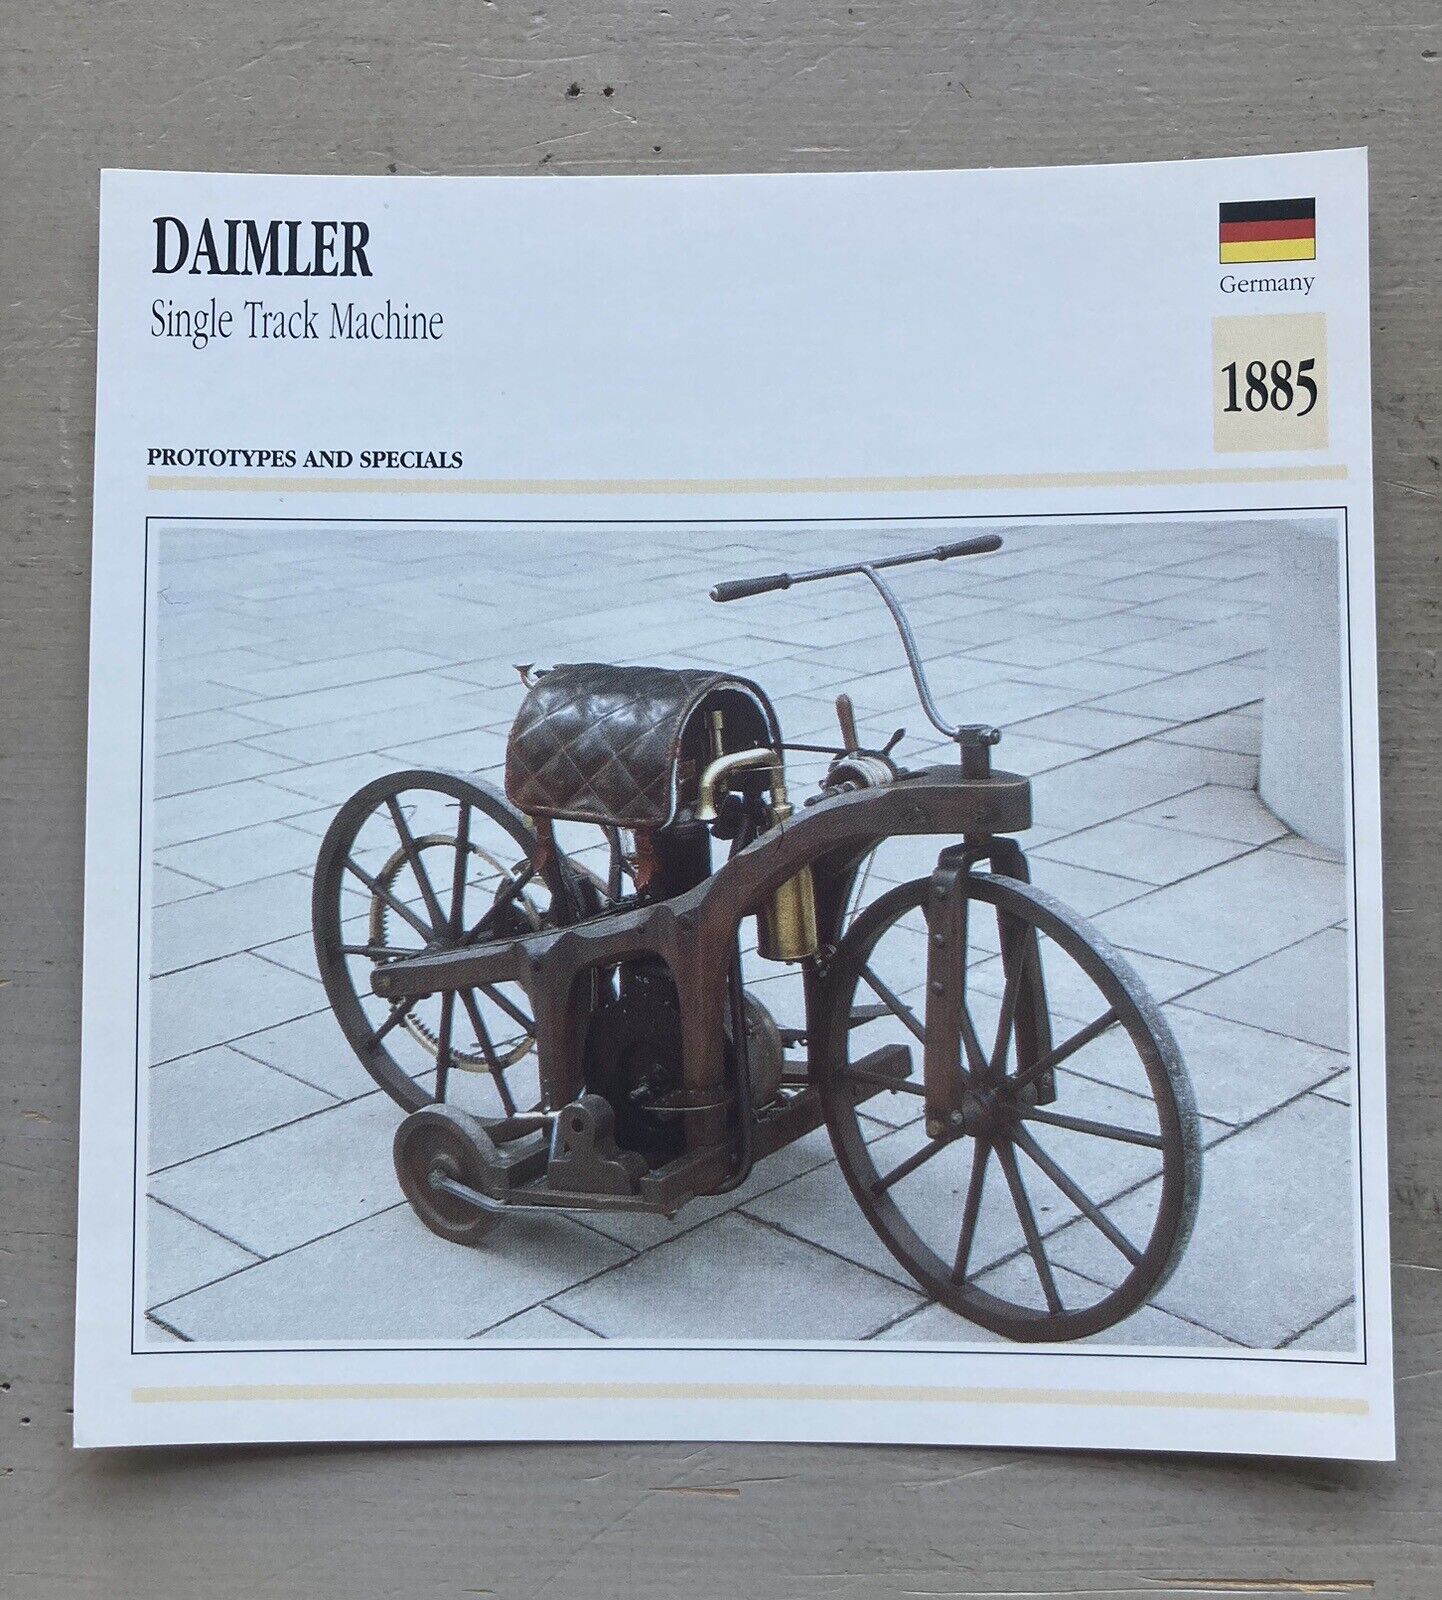 1885 German Daimler, Single Track Machine - Motorcycle Photo Info Card